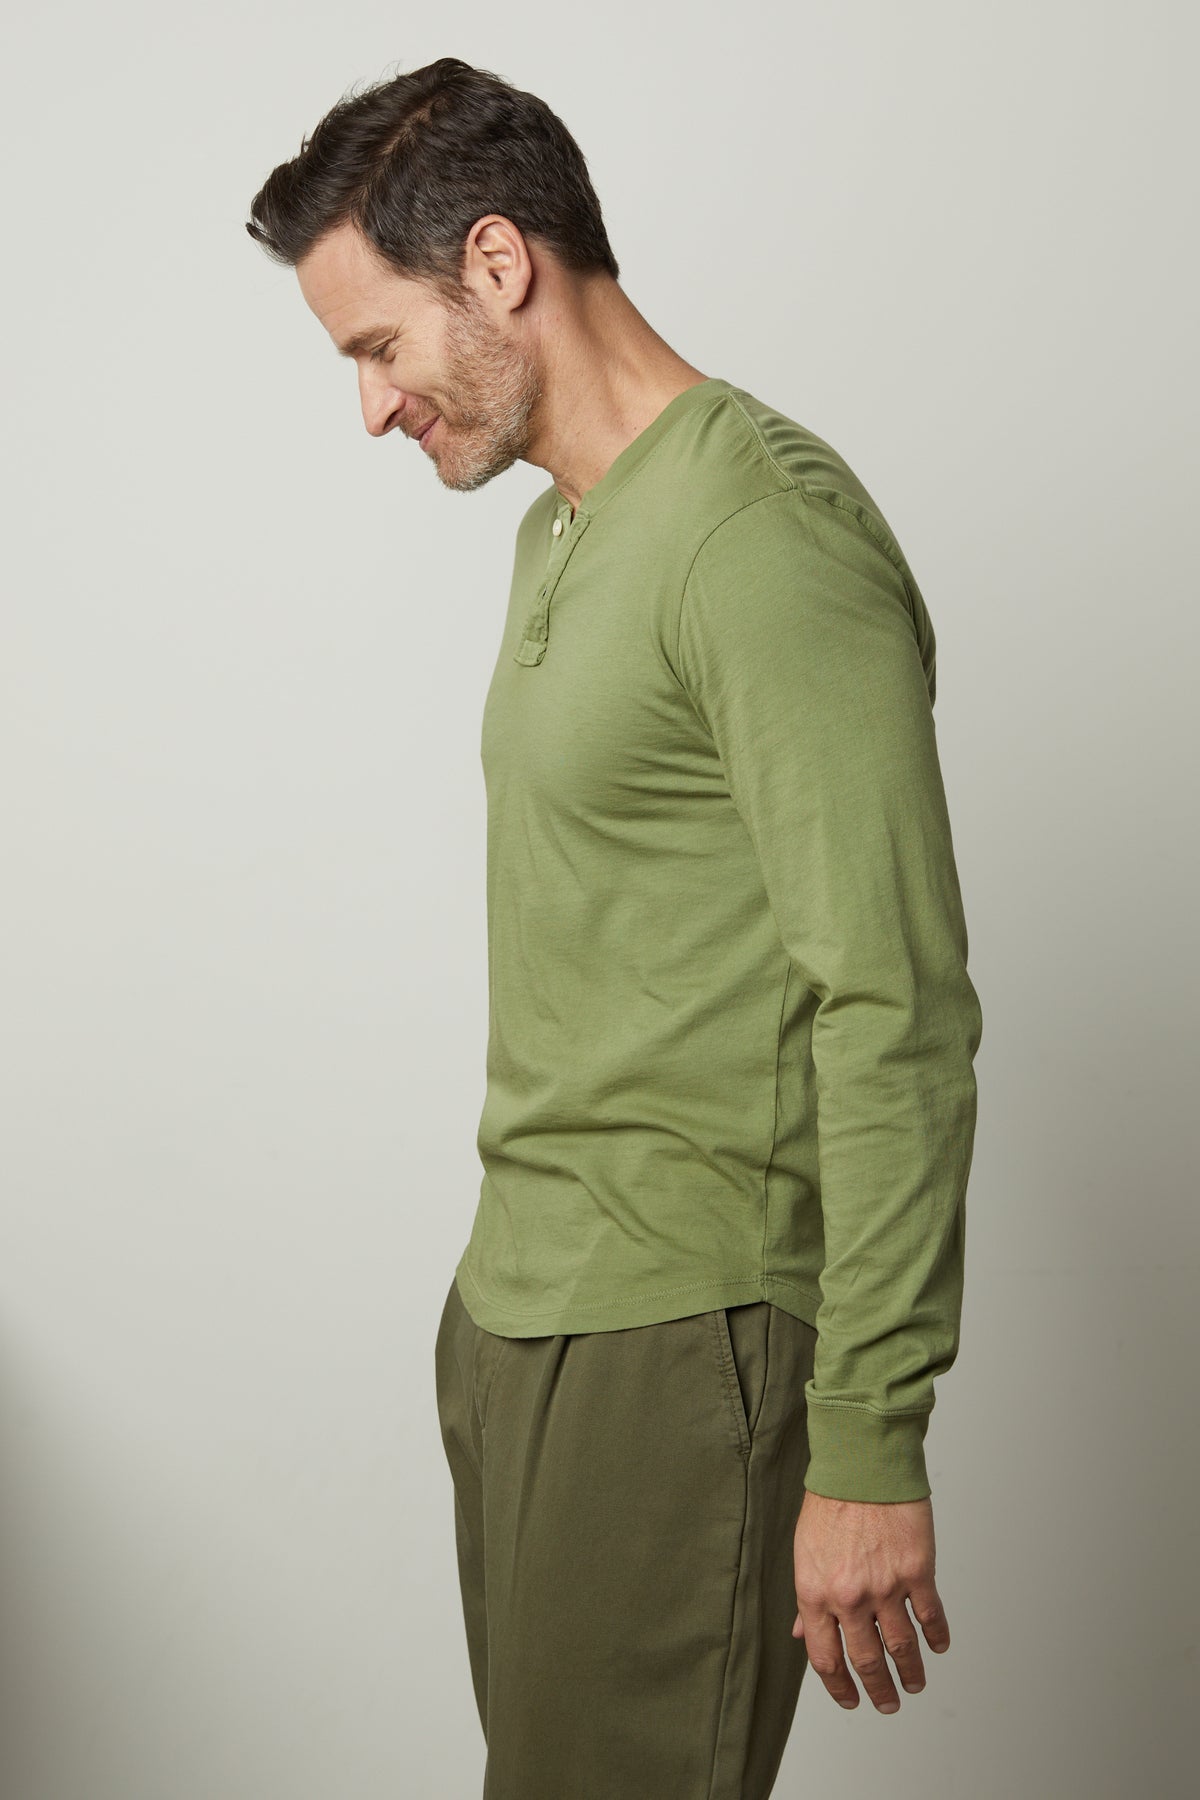 A man wearing the Velvet by Graham & Spencer BRADEN HENLEY shirt and green pants.-35567416705217